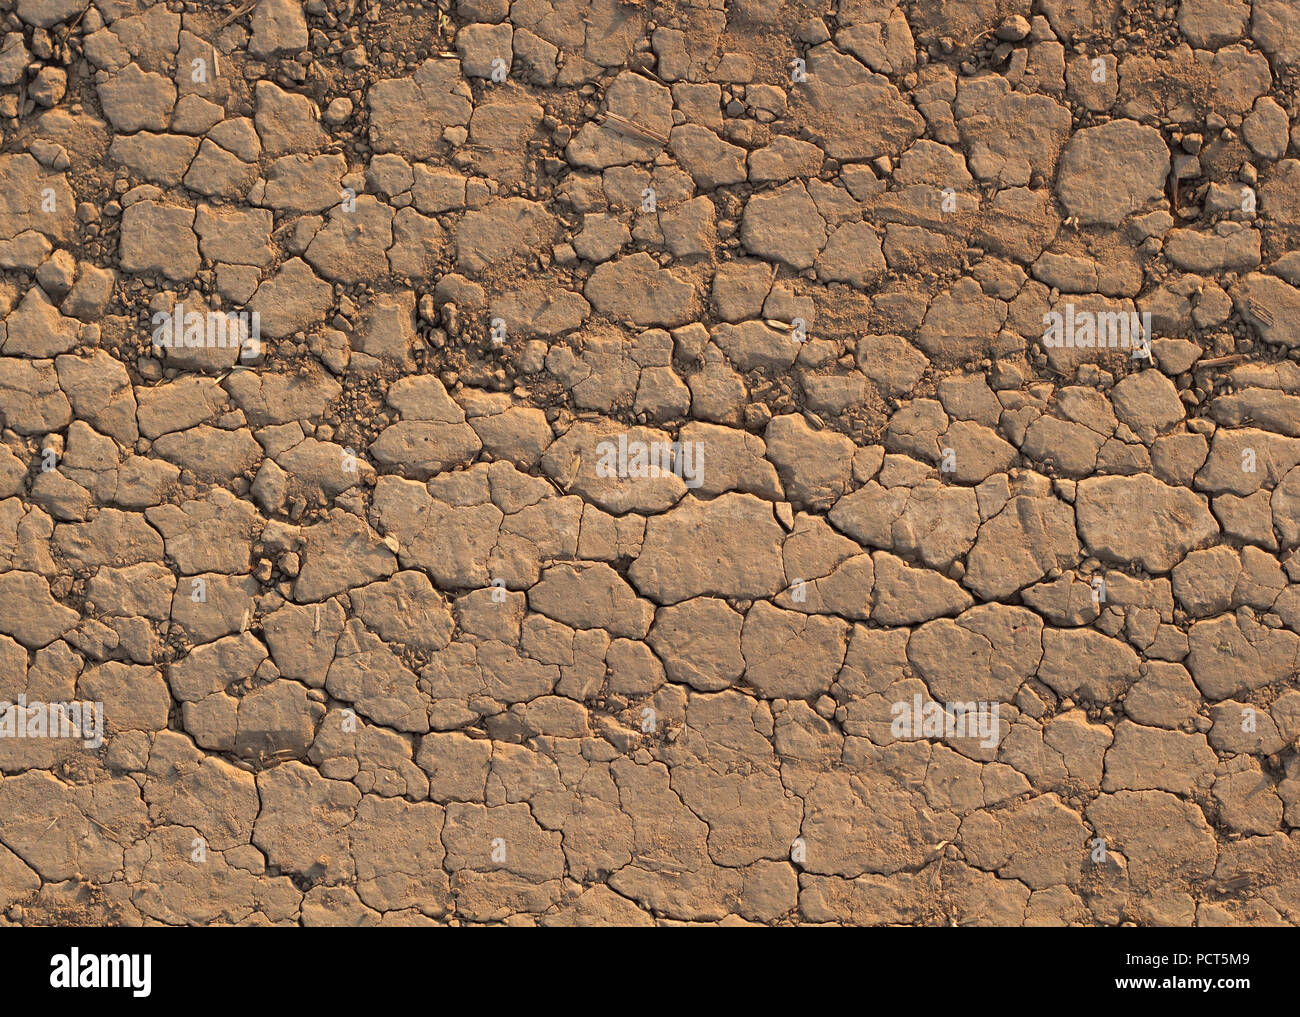 Desert crust soil closeup background photo Stock Photo